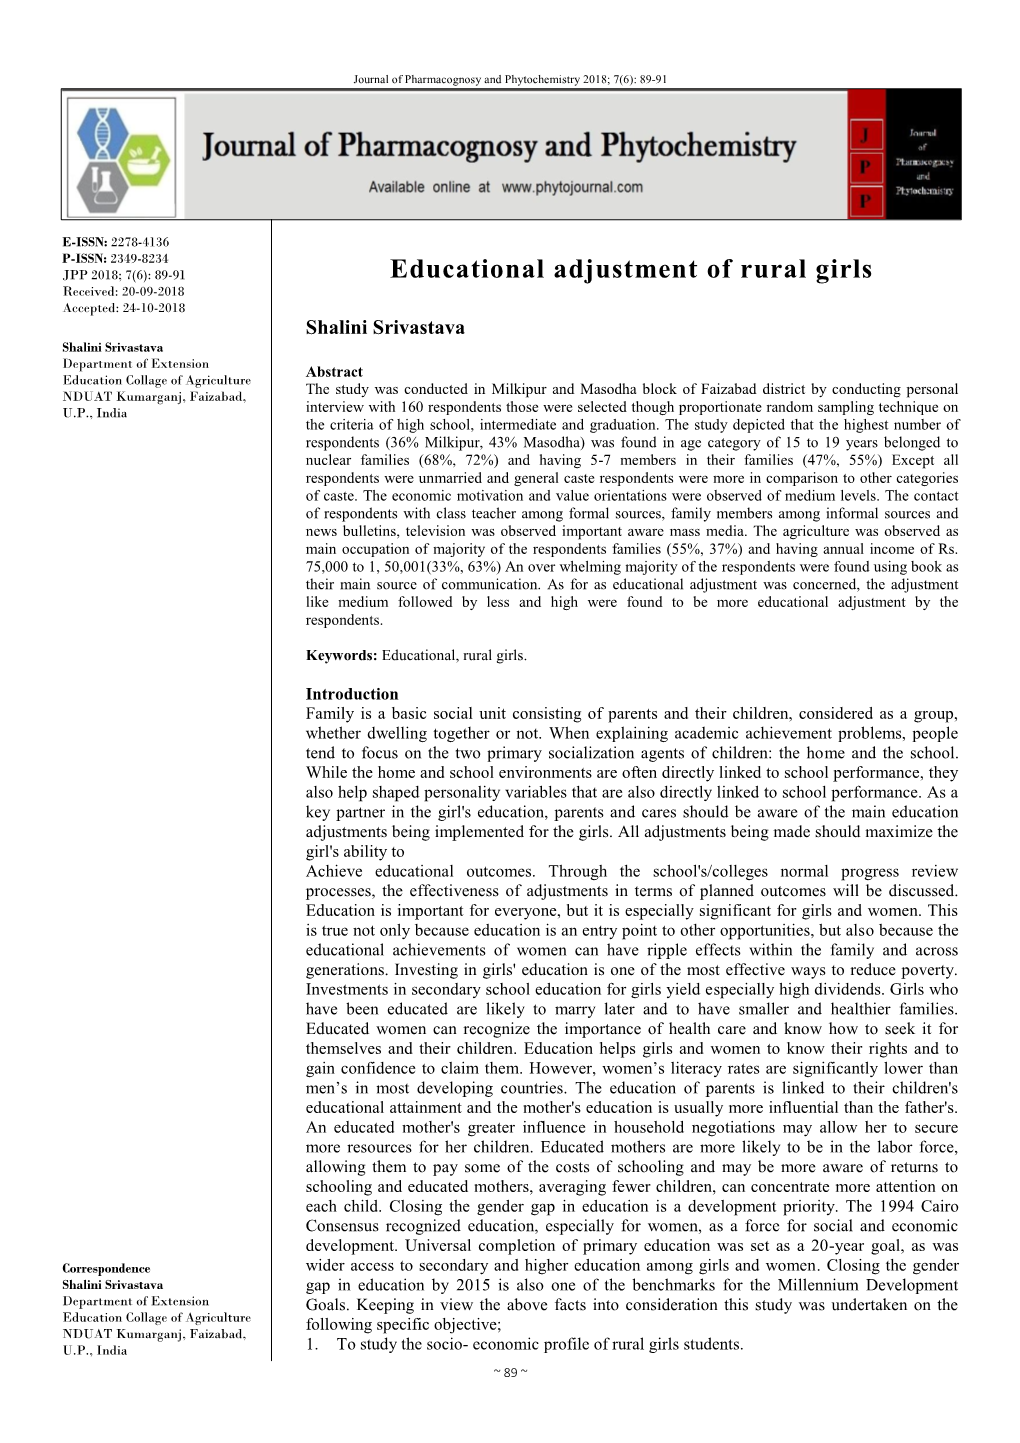 Educational Adjustment of Rural Girls